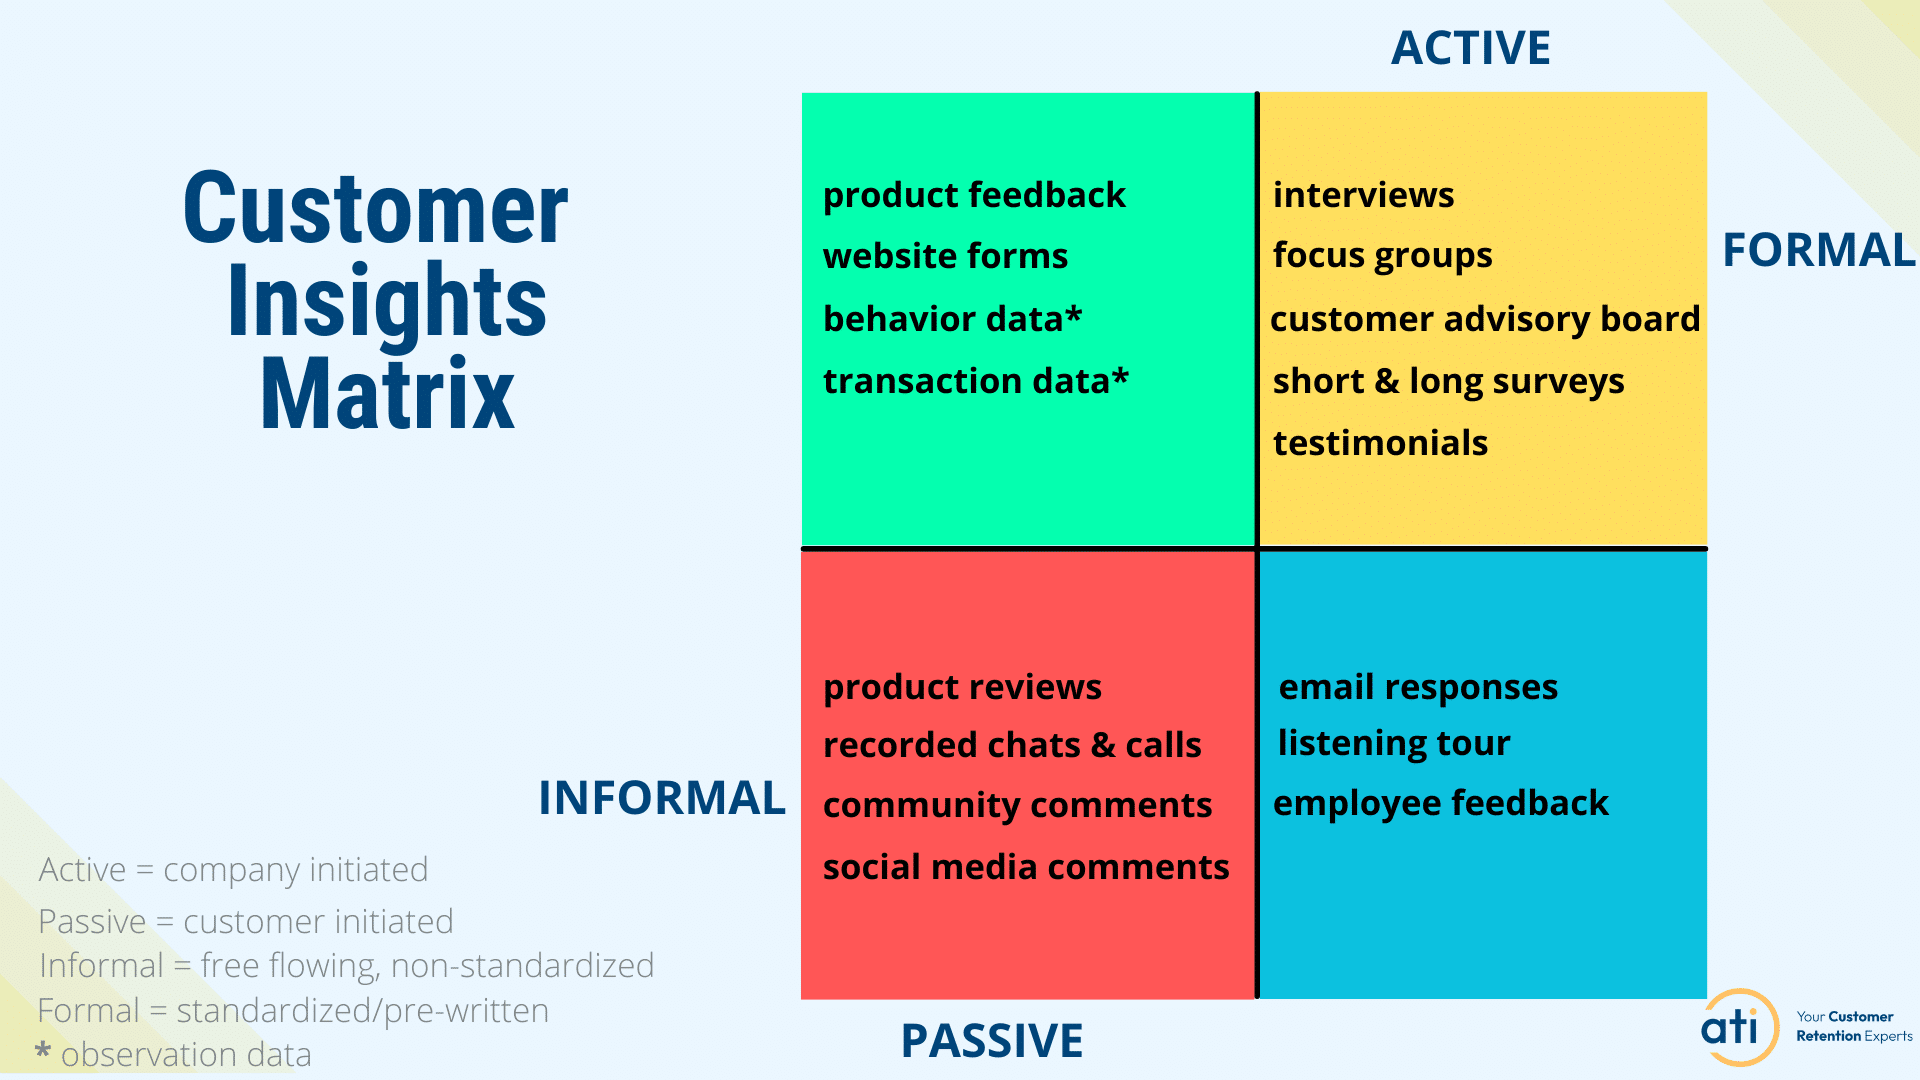 customer insights matrix including active, passive, formal and informal activities